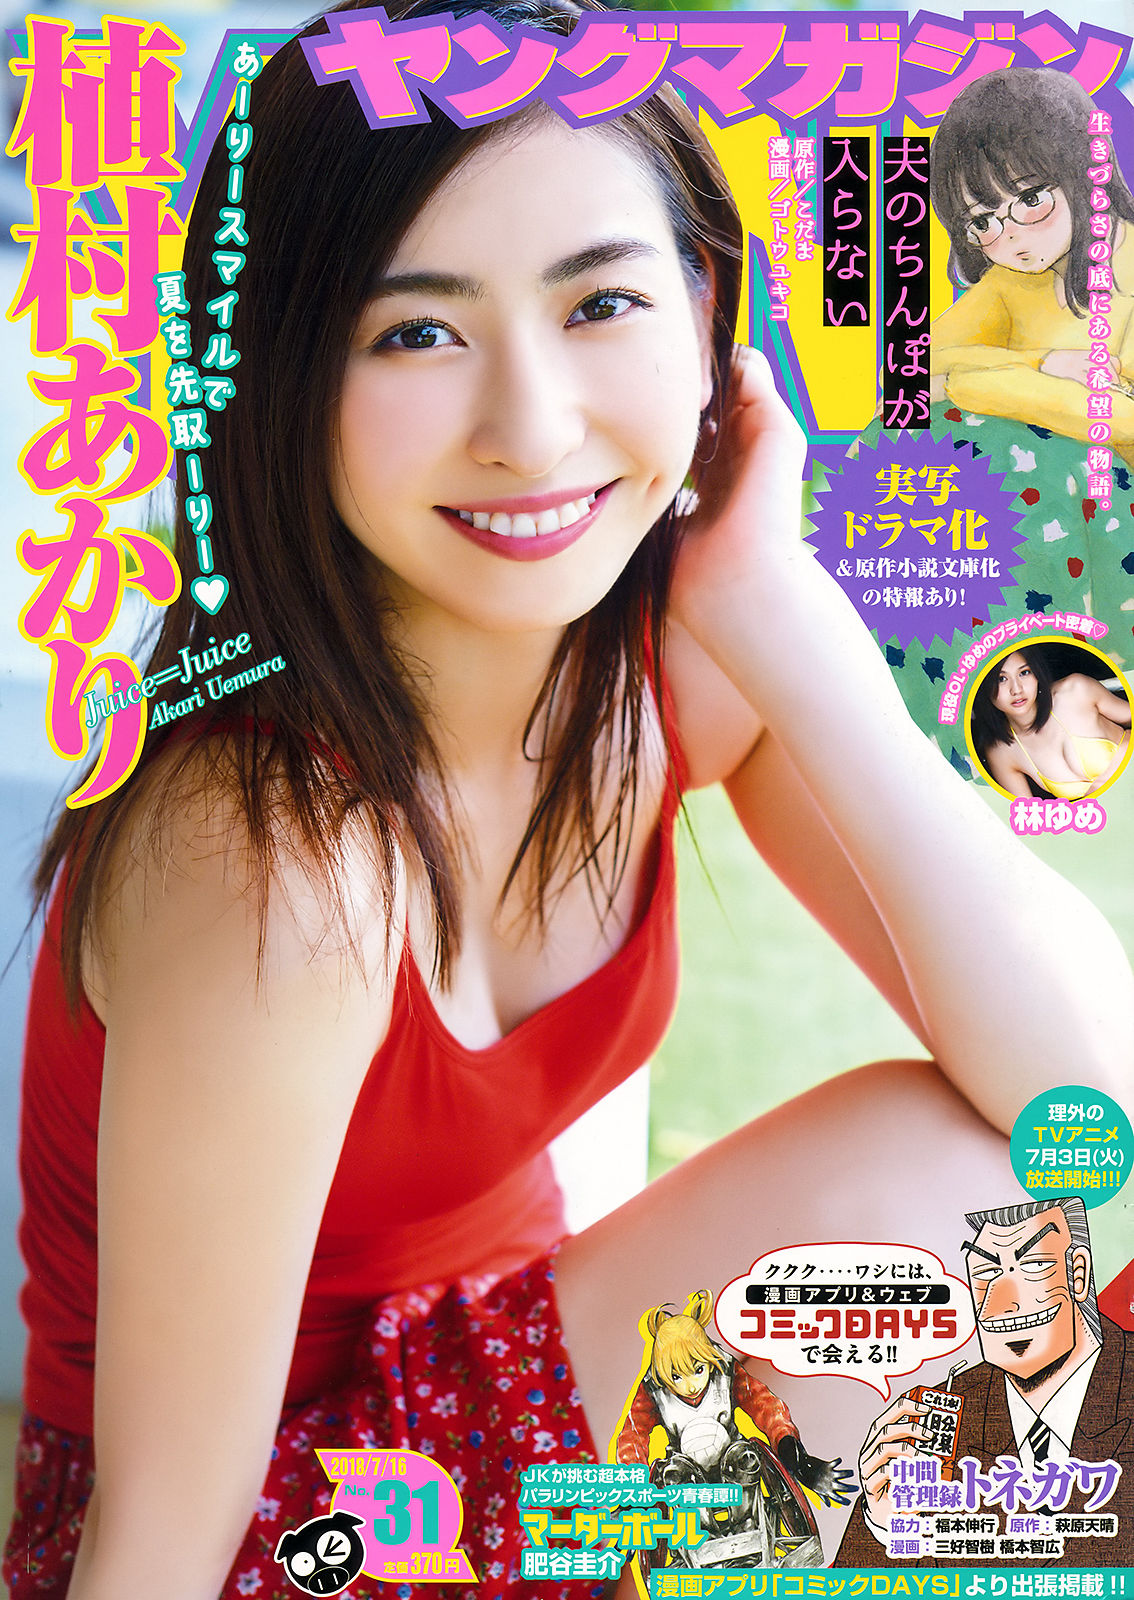 Young magazine. Японские журналы для молодёжи. Японские журналы для молодёжи для девушек. Юмэ Хаяси.